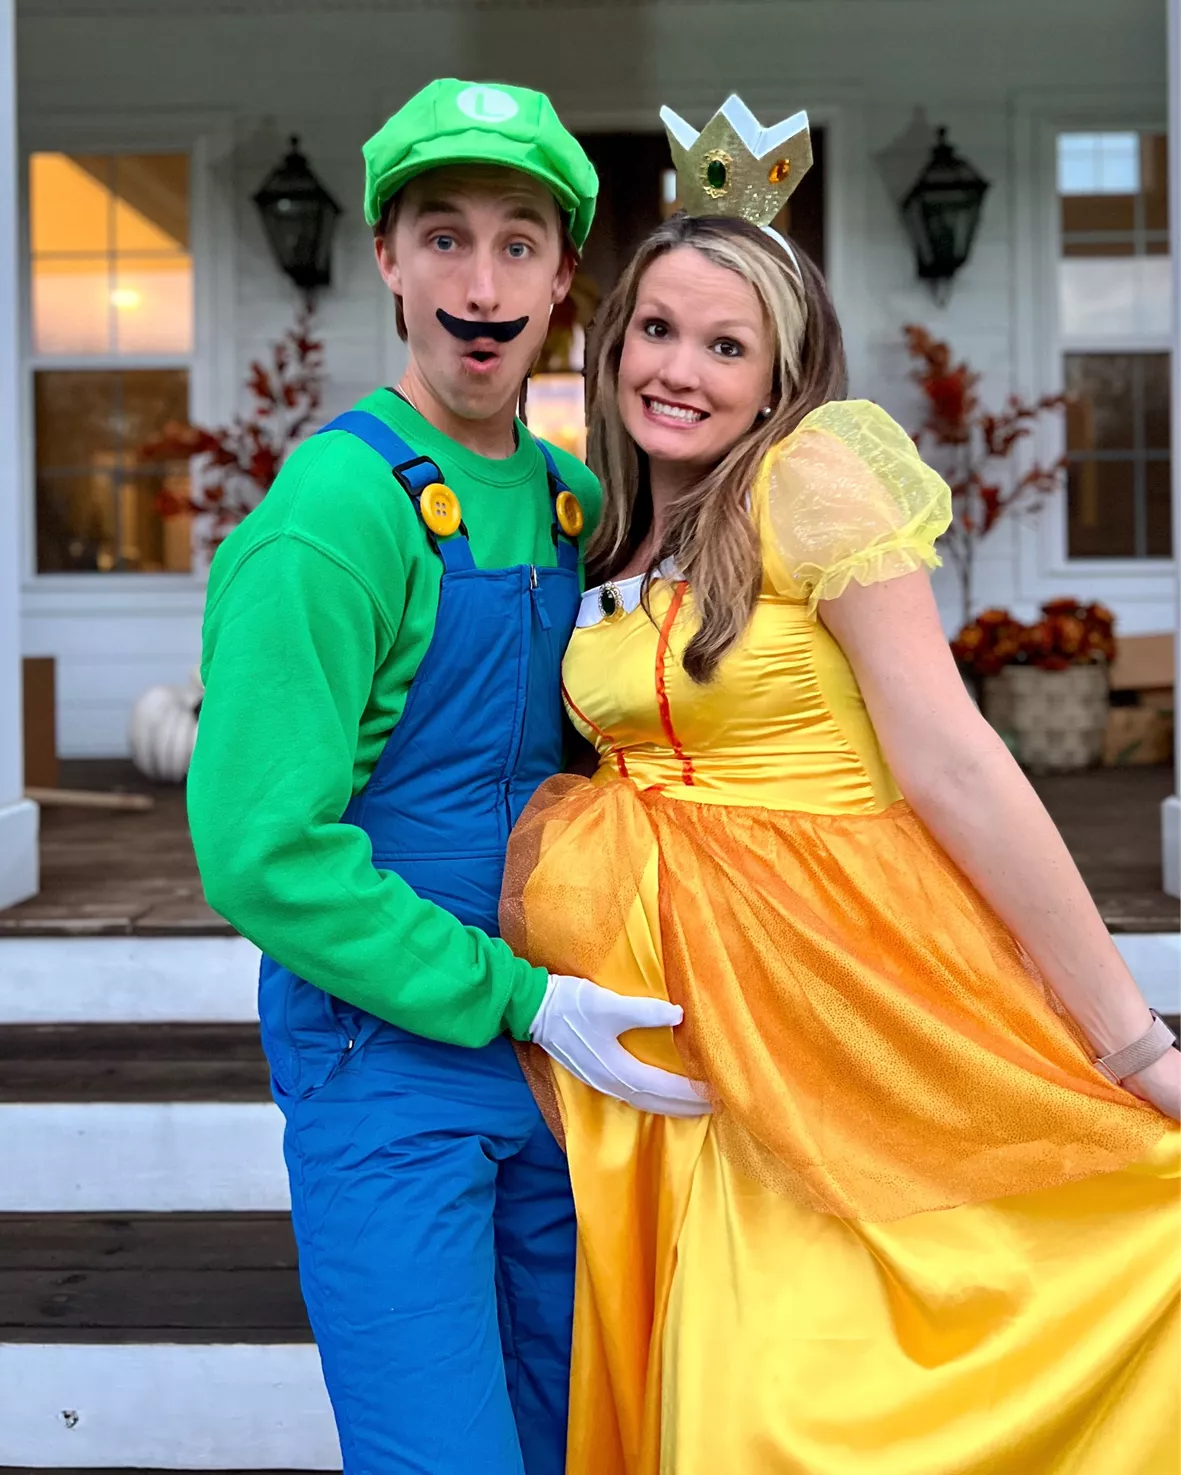 Mario and Luigi Couple Costume